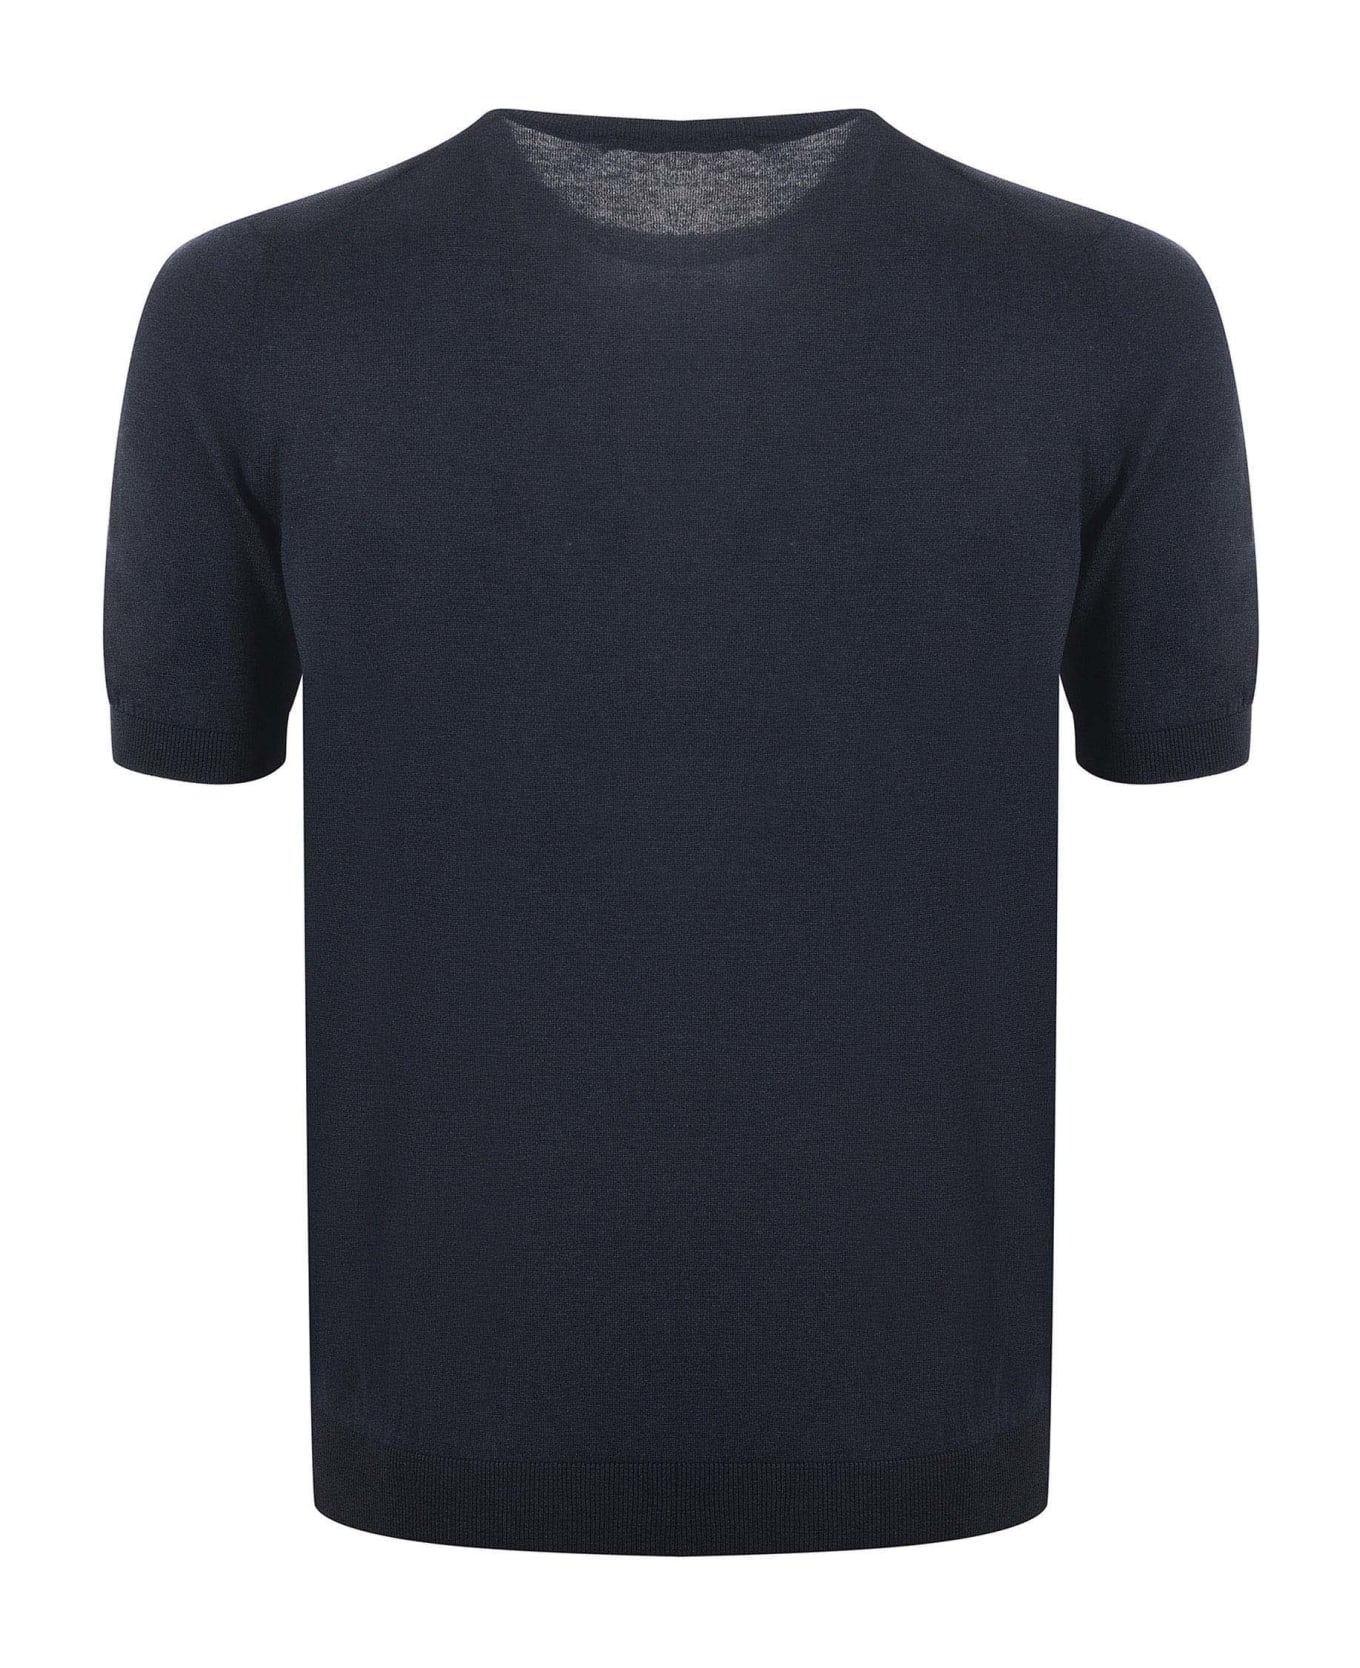 Tagliatore T-shirt - Blu melange